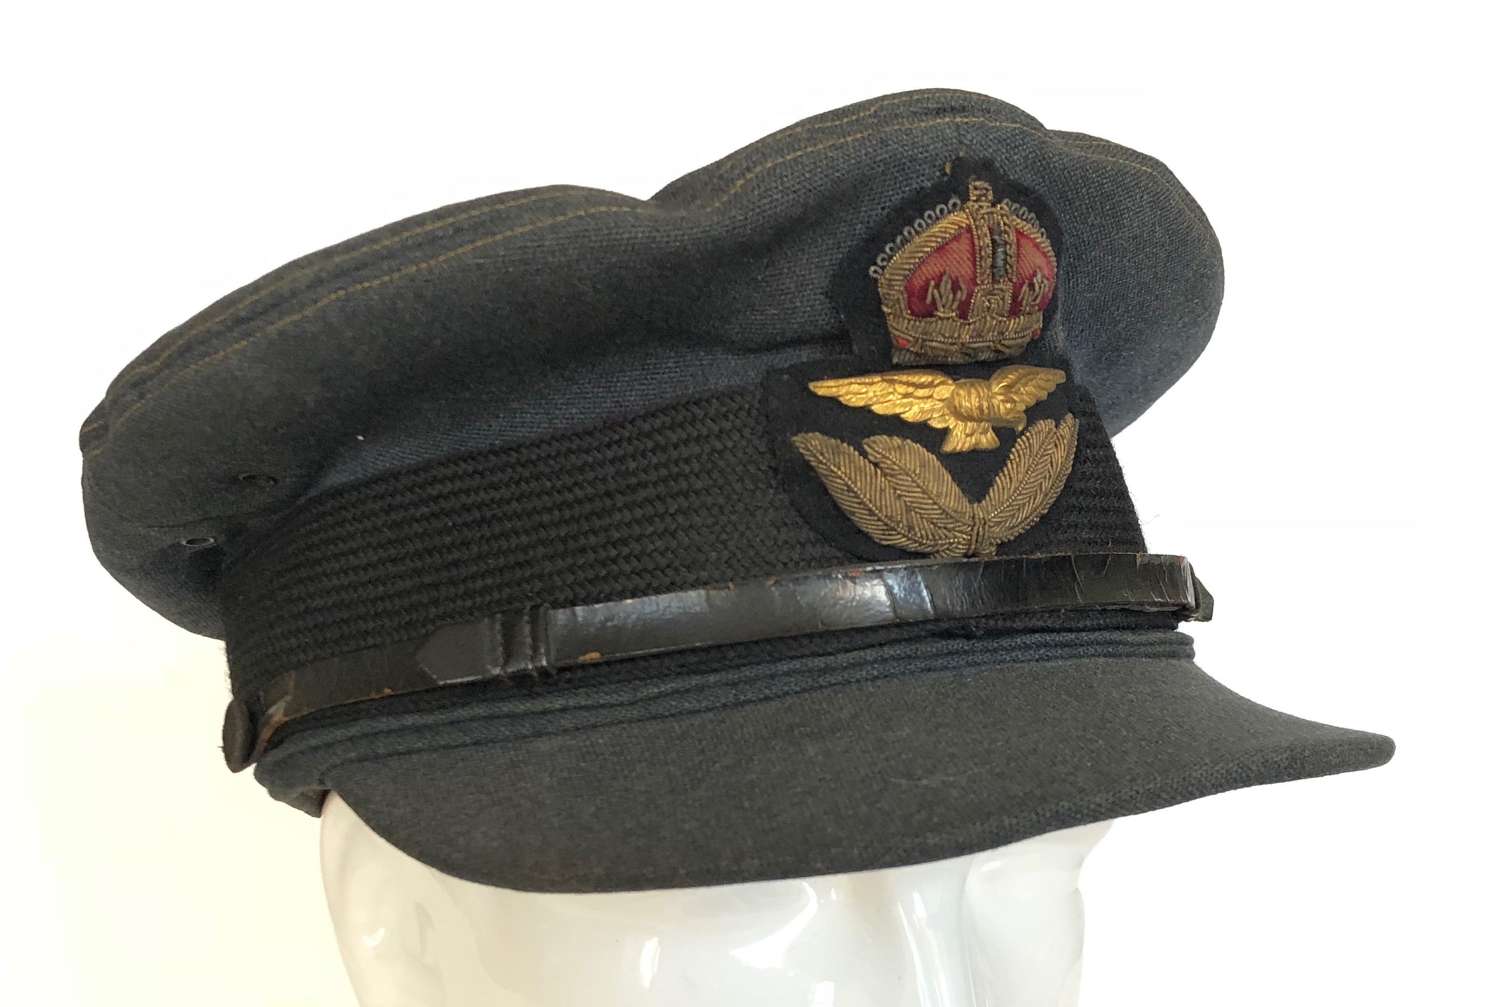 WW2 RAF Officer’s Cap.